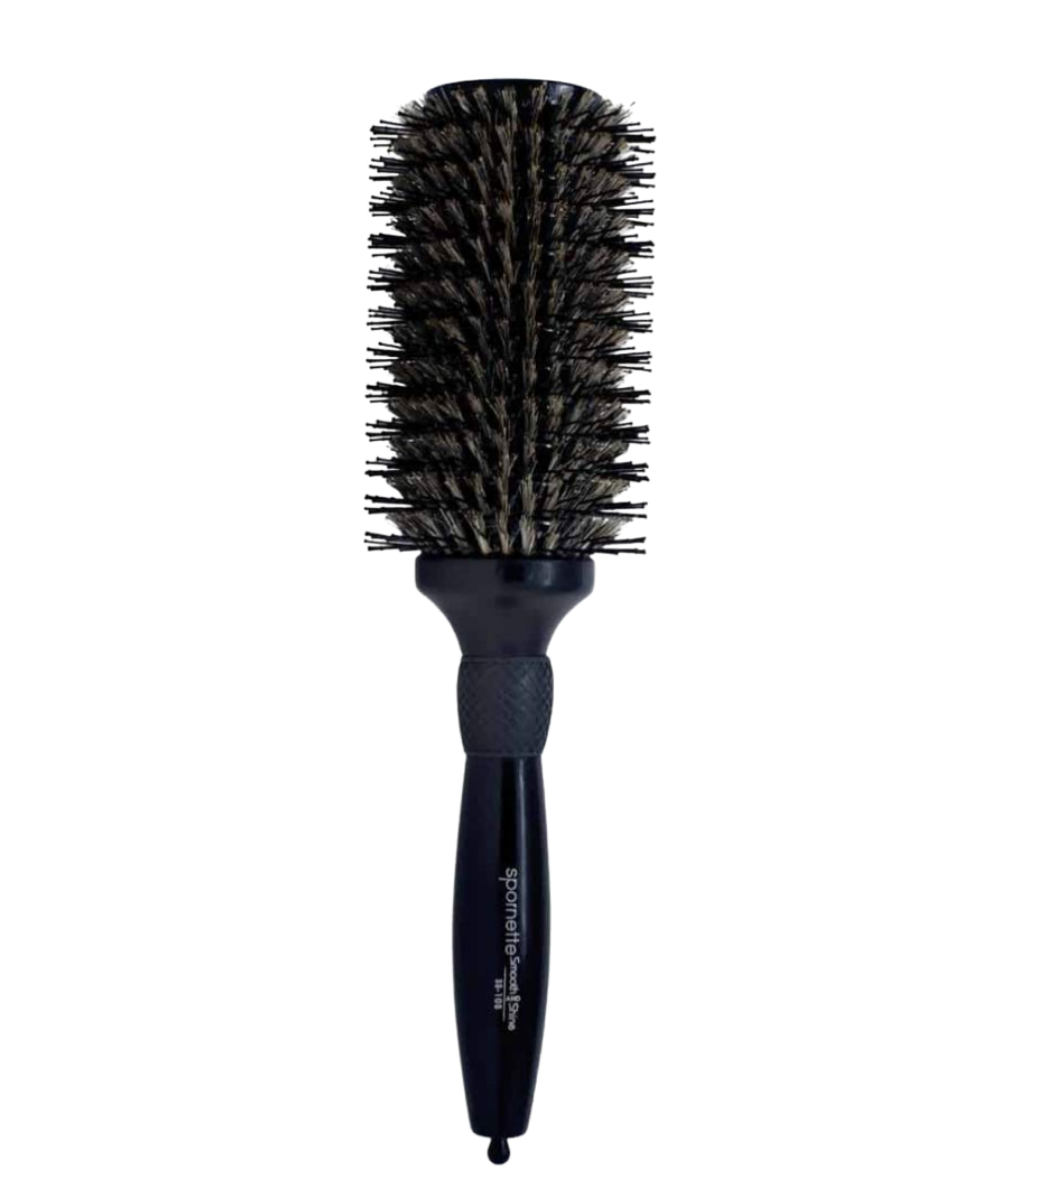 SPORNETTE SPORNETTE Smooth & Shine Hair Brush, 2 3/4 Inch - SS-105